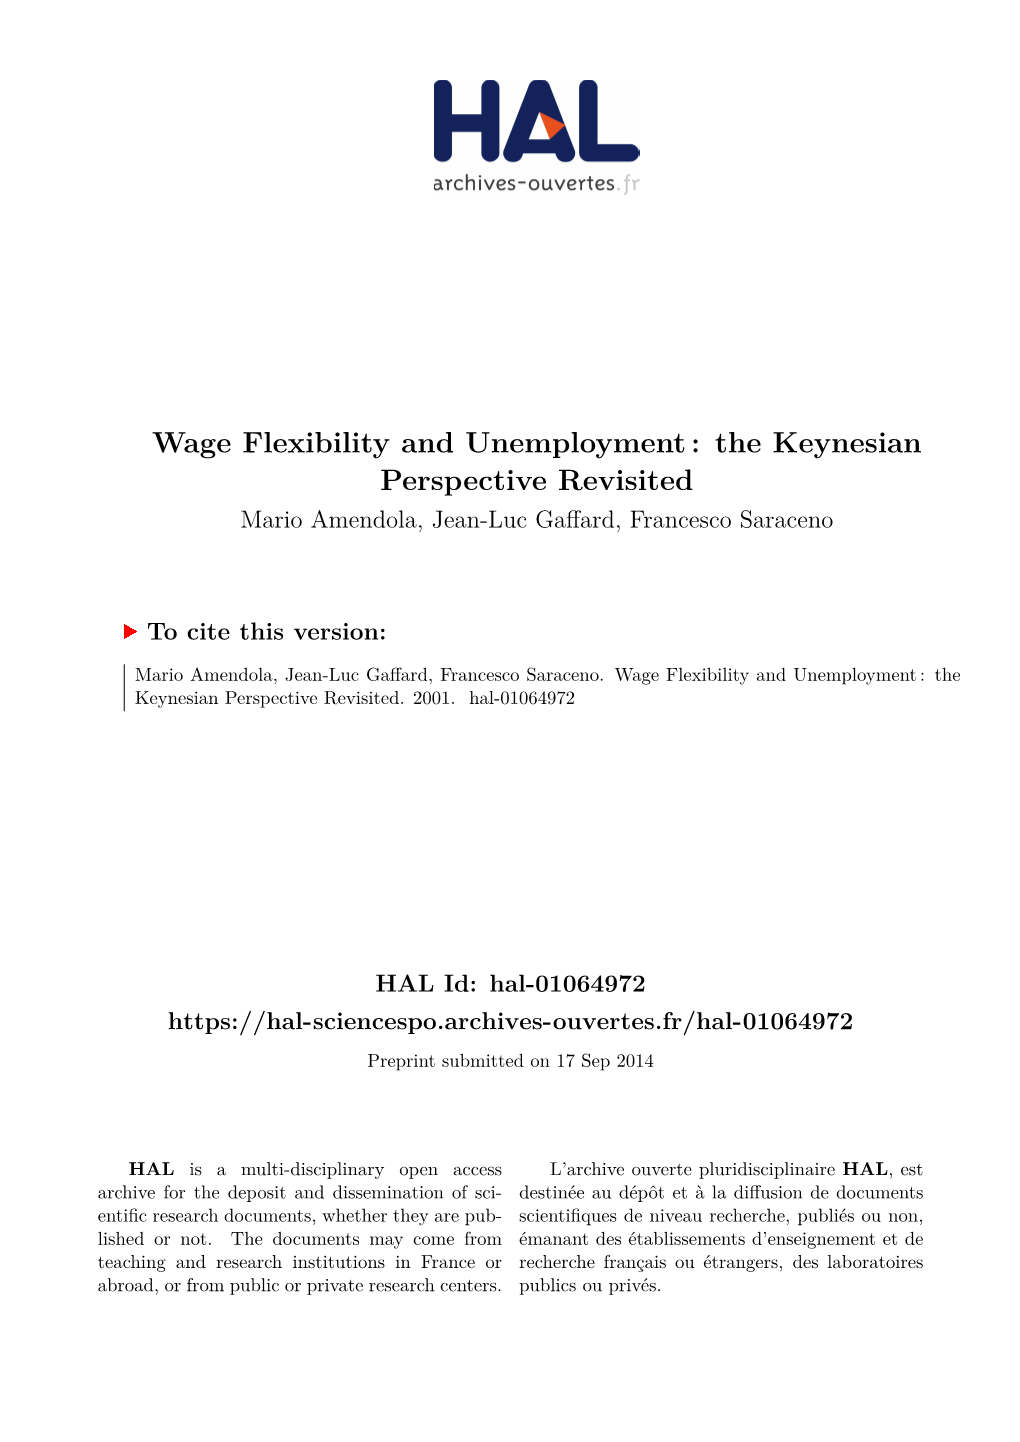 Wage Flexibility and Unemployment : the Keynesian Perspective Revisited Mario Amendola, Jean-Luc Gaffard, Francesco Saraceno